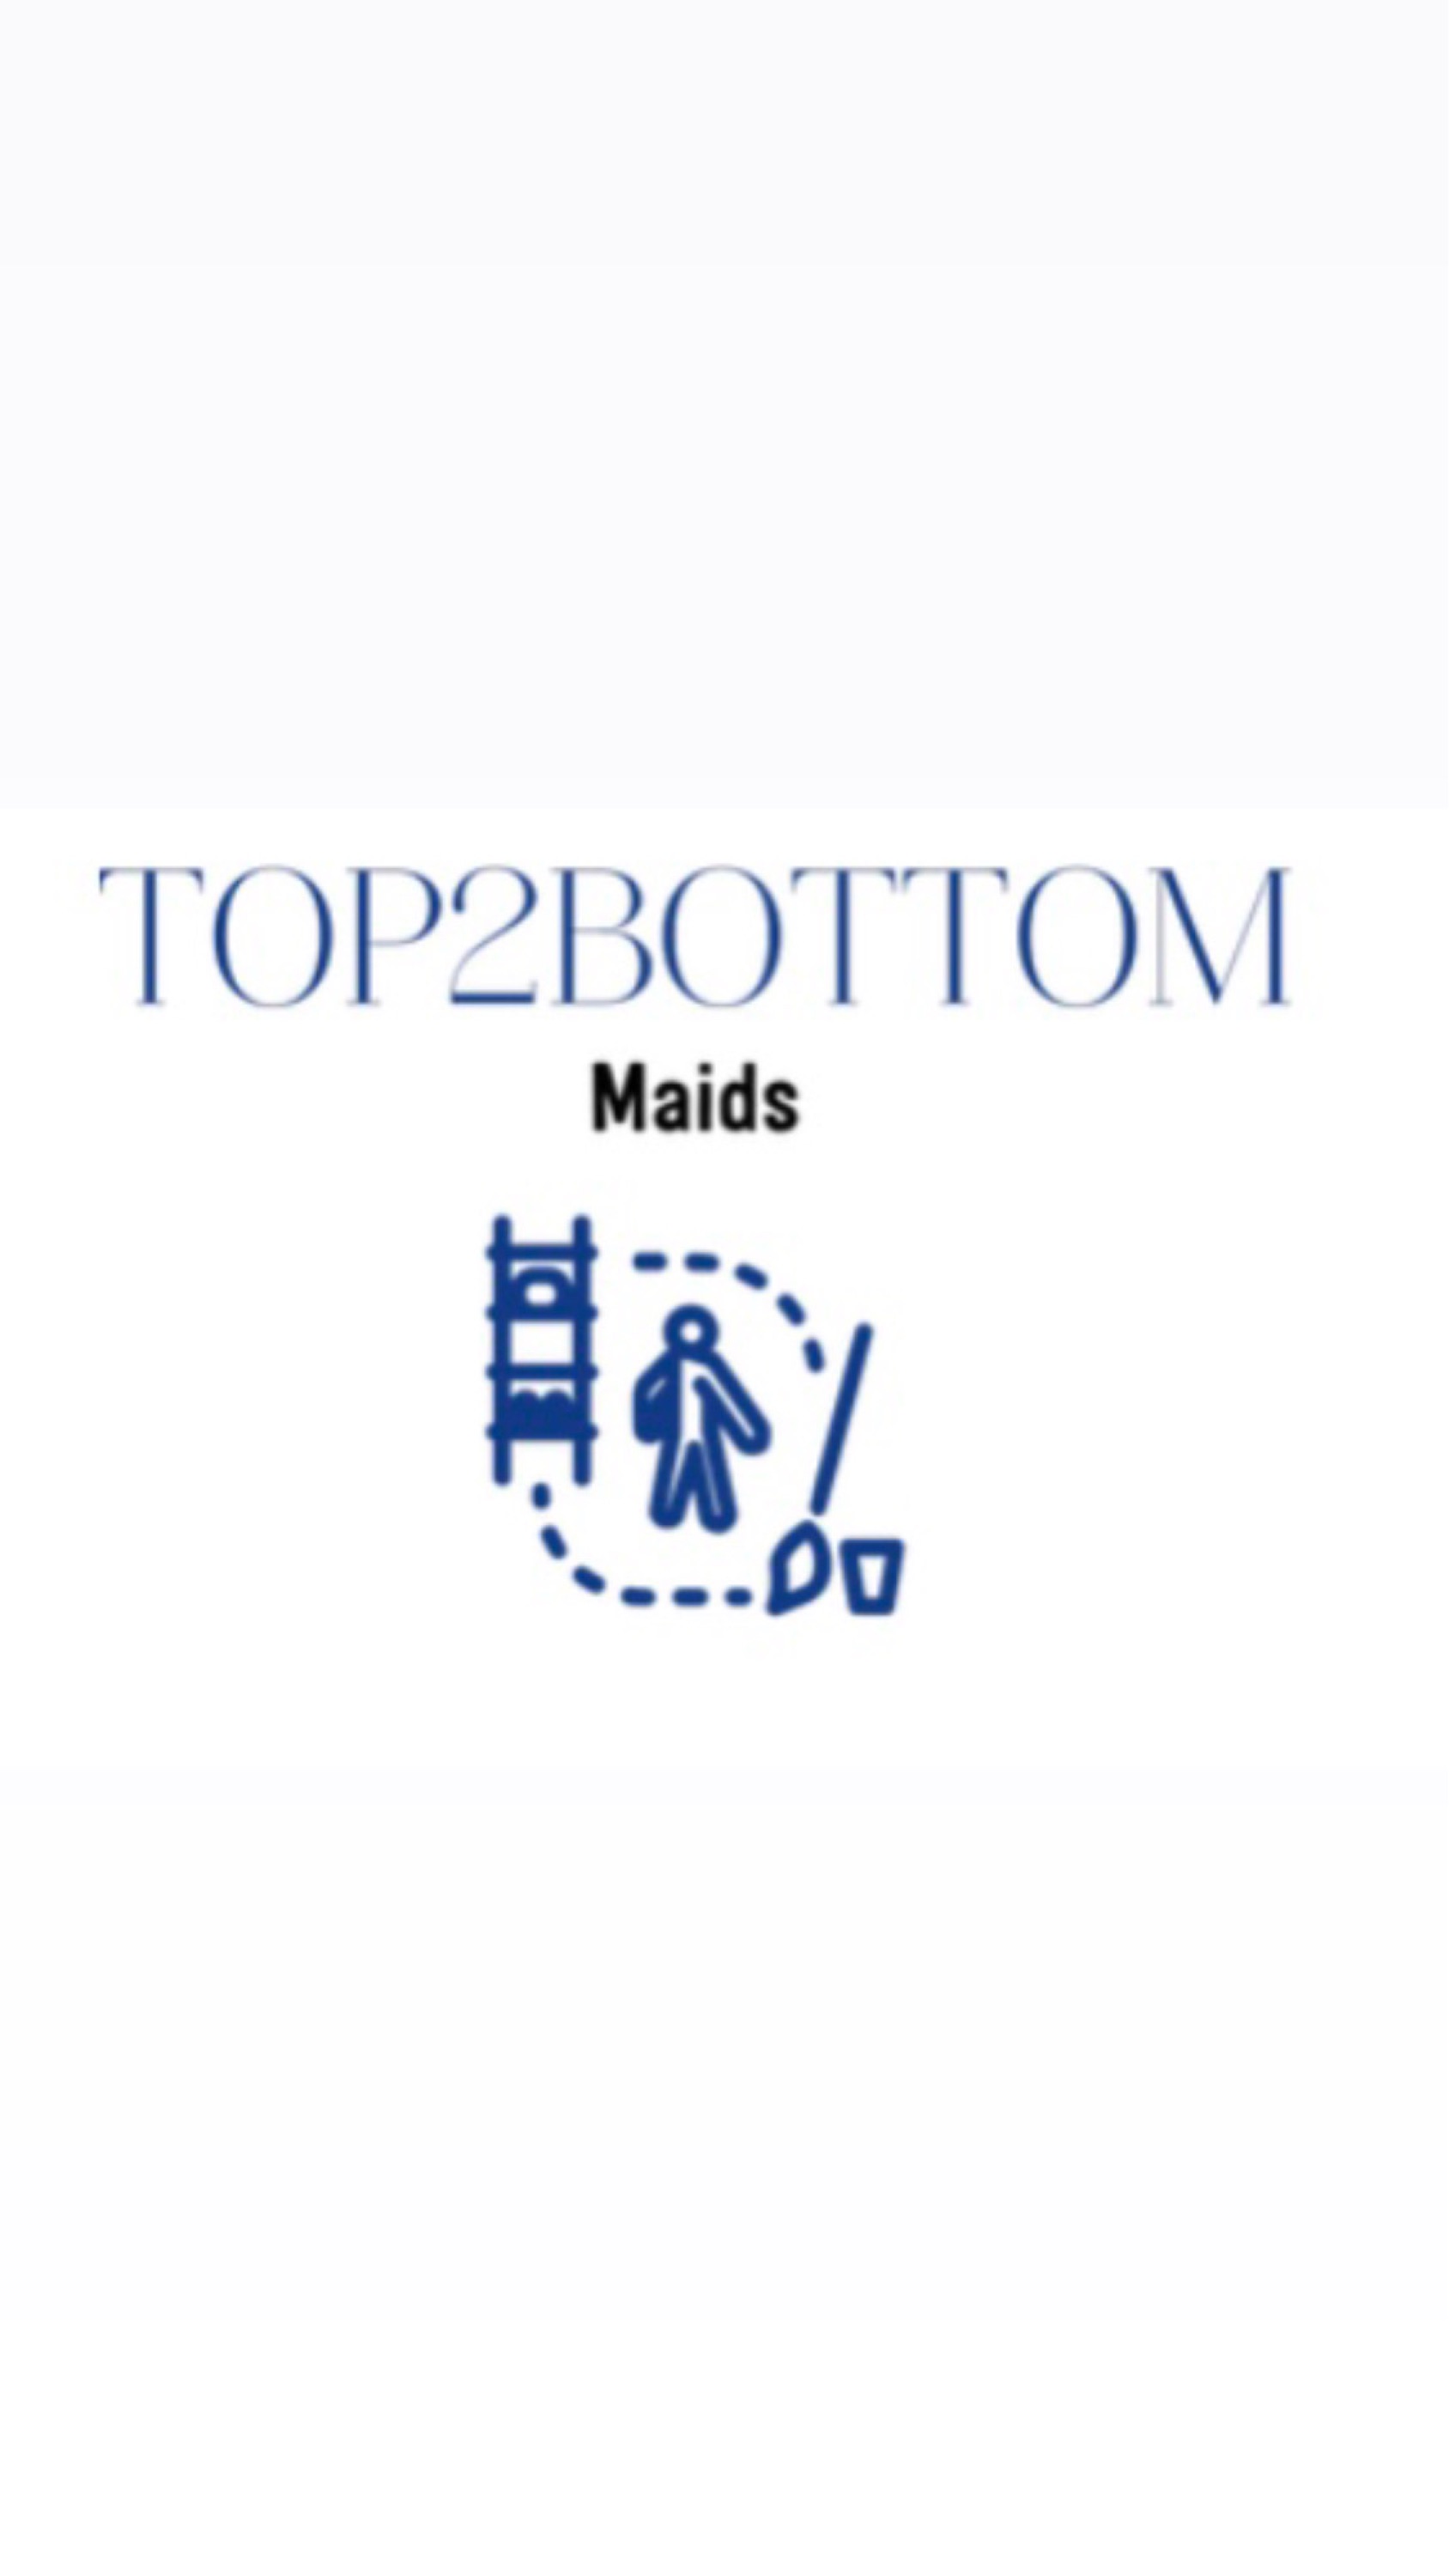 Top 2 Bottom Maids Logo